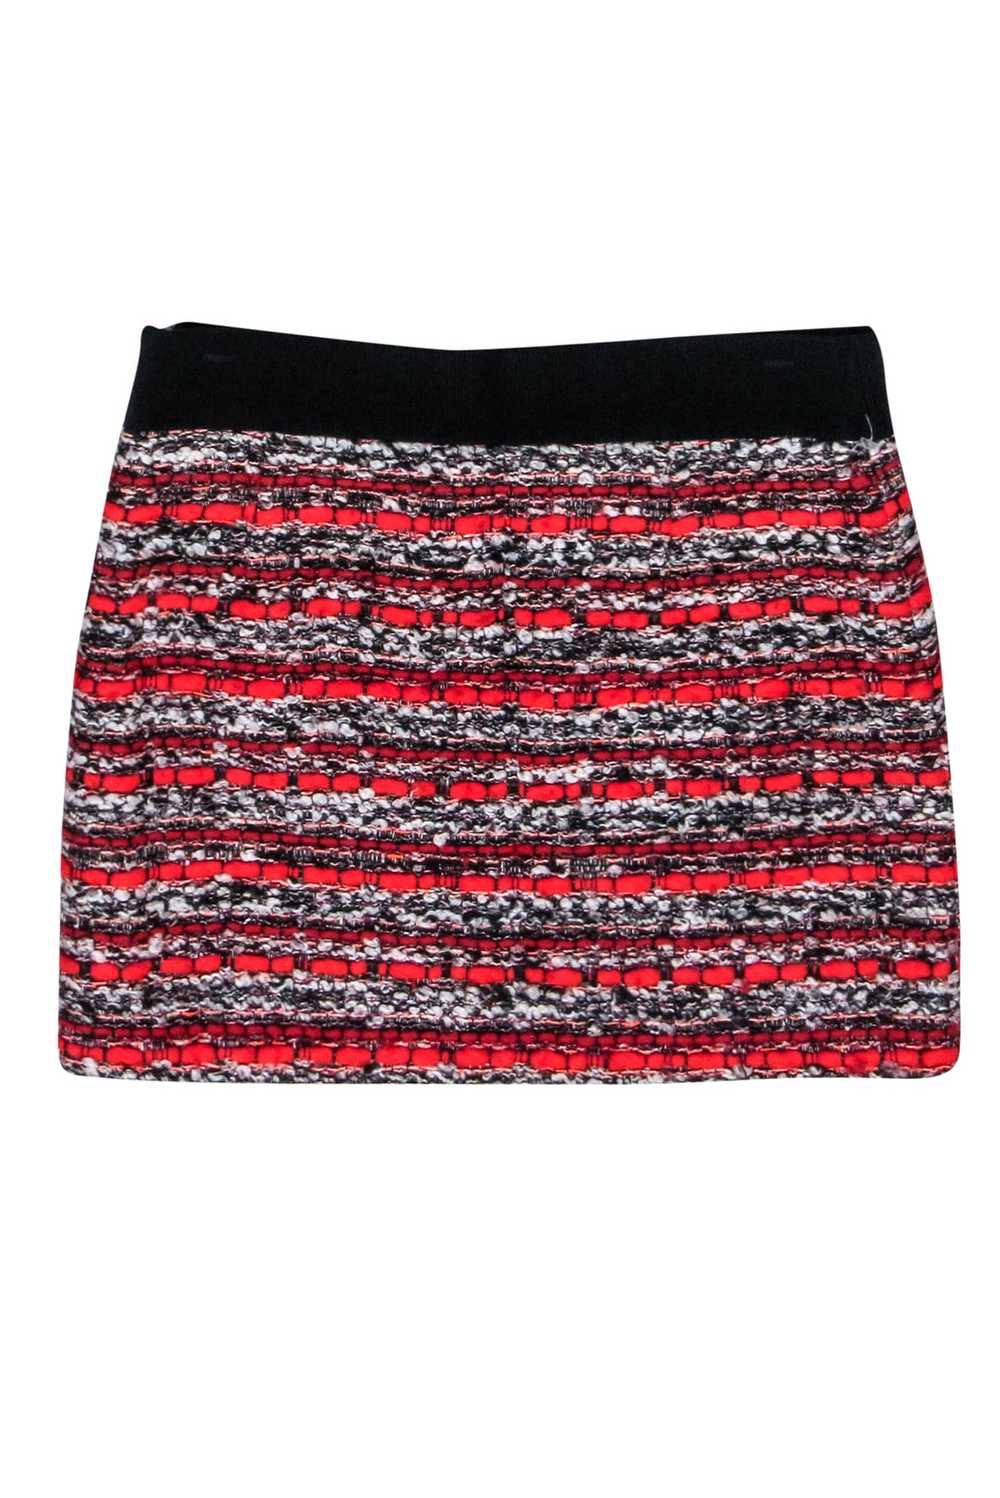 Milly - Red, Black, & Grey Tweed Mini Skirt Sz 4 - image 2